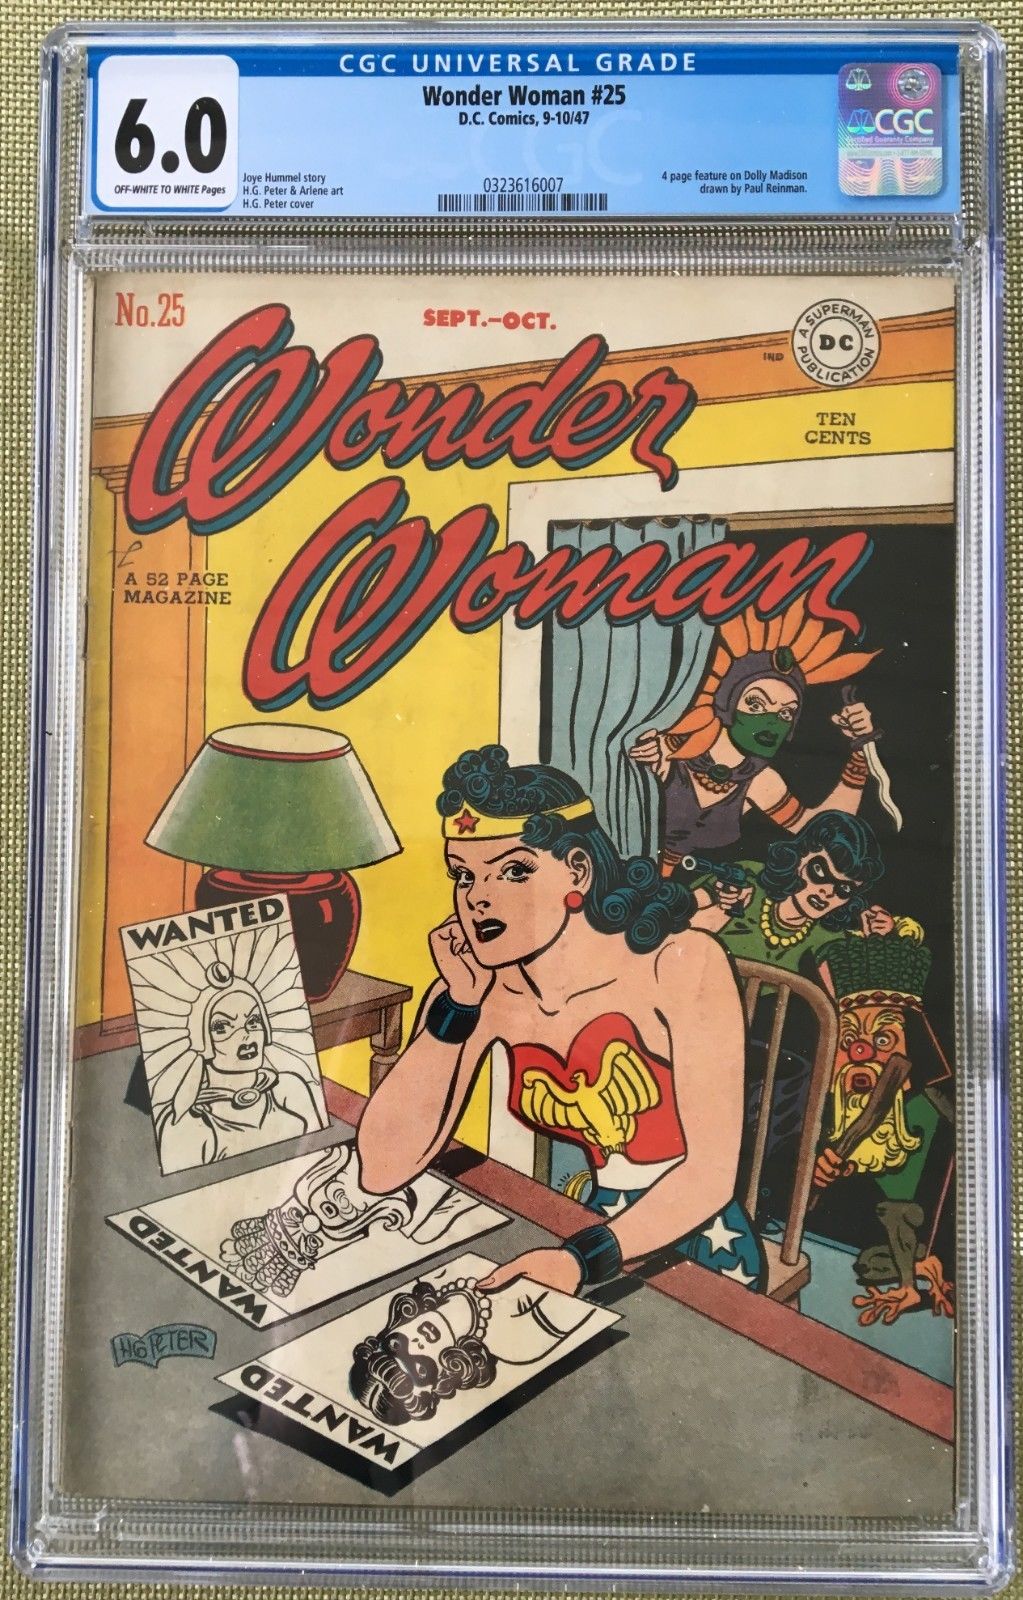 Wonder Woman #25 CGC 6.0 ow/w